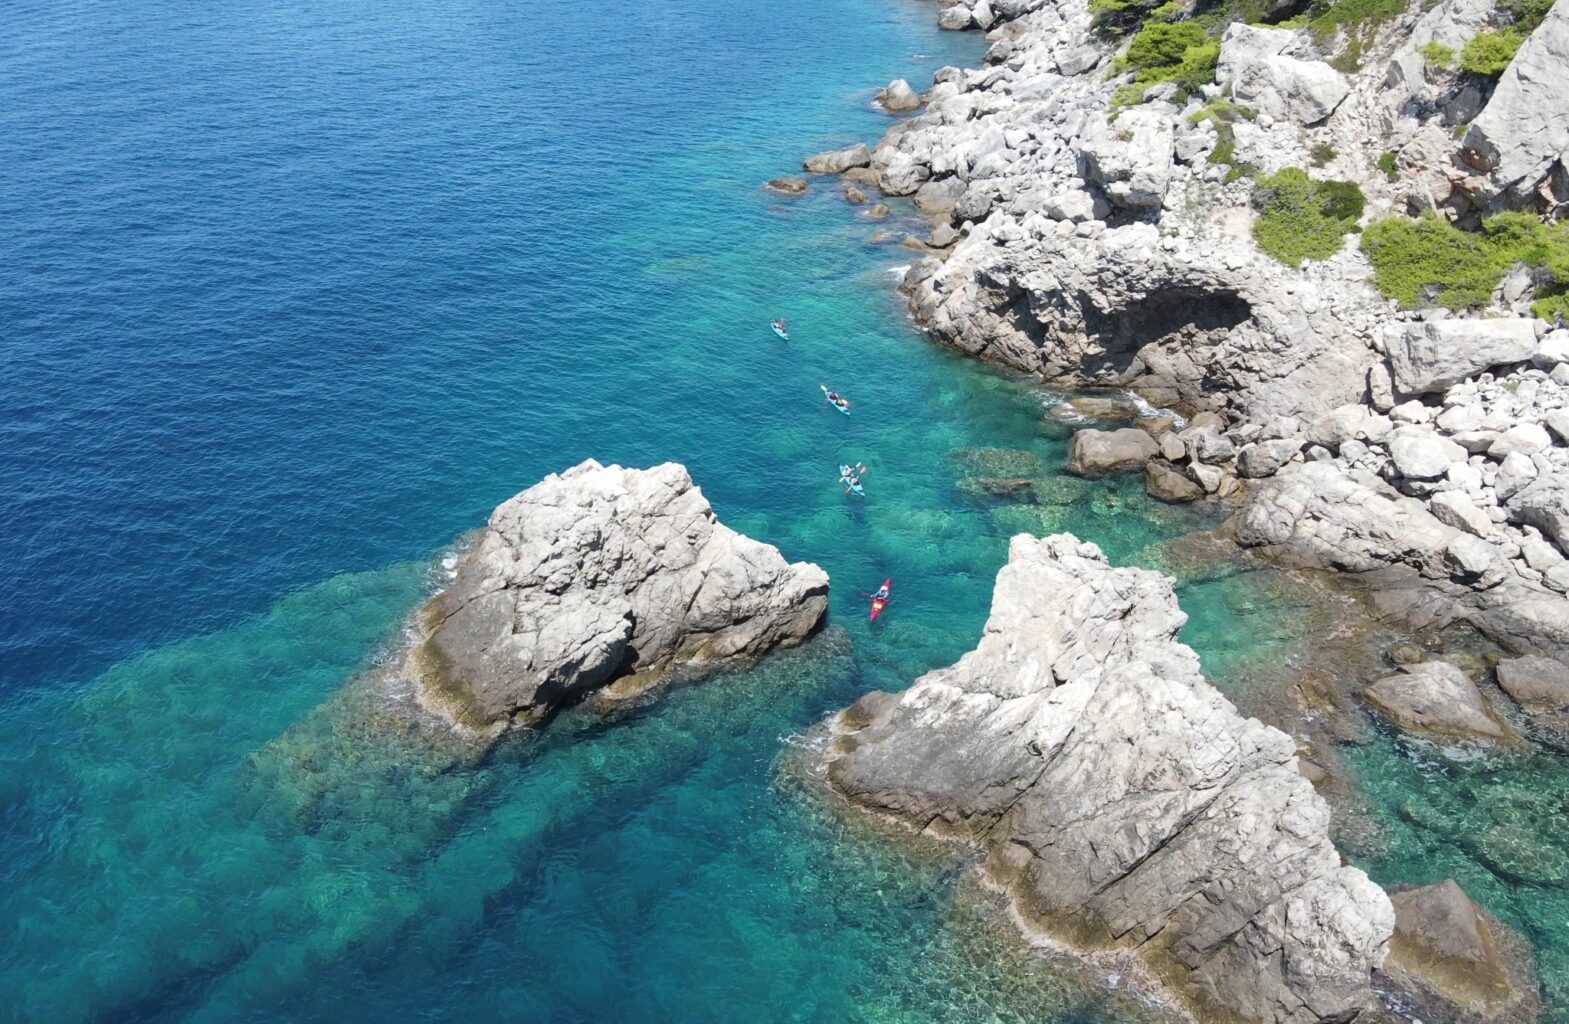 The blue waters off the coast of Croatia.